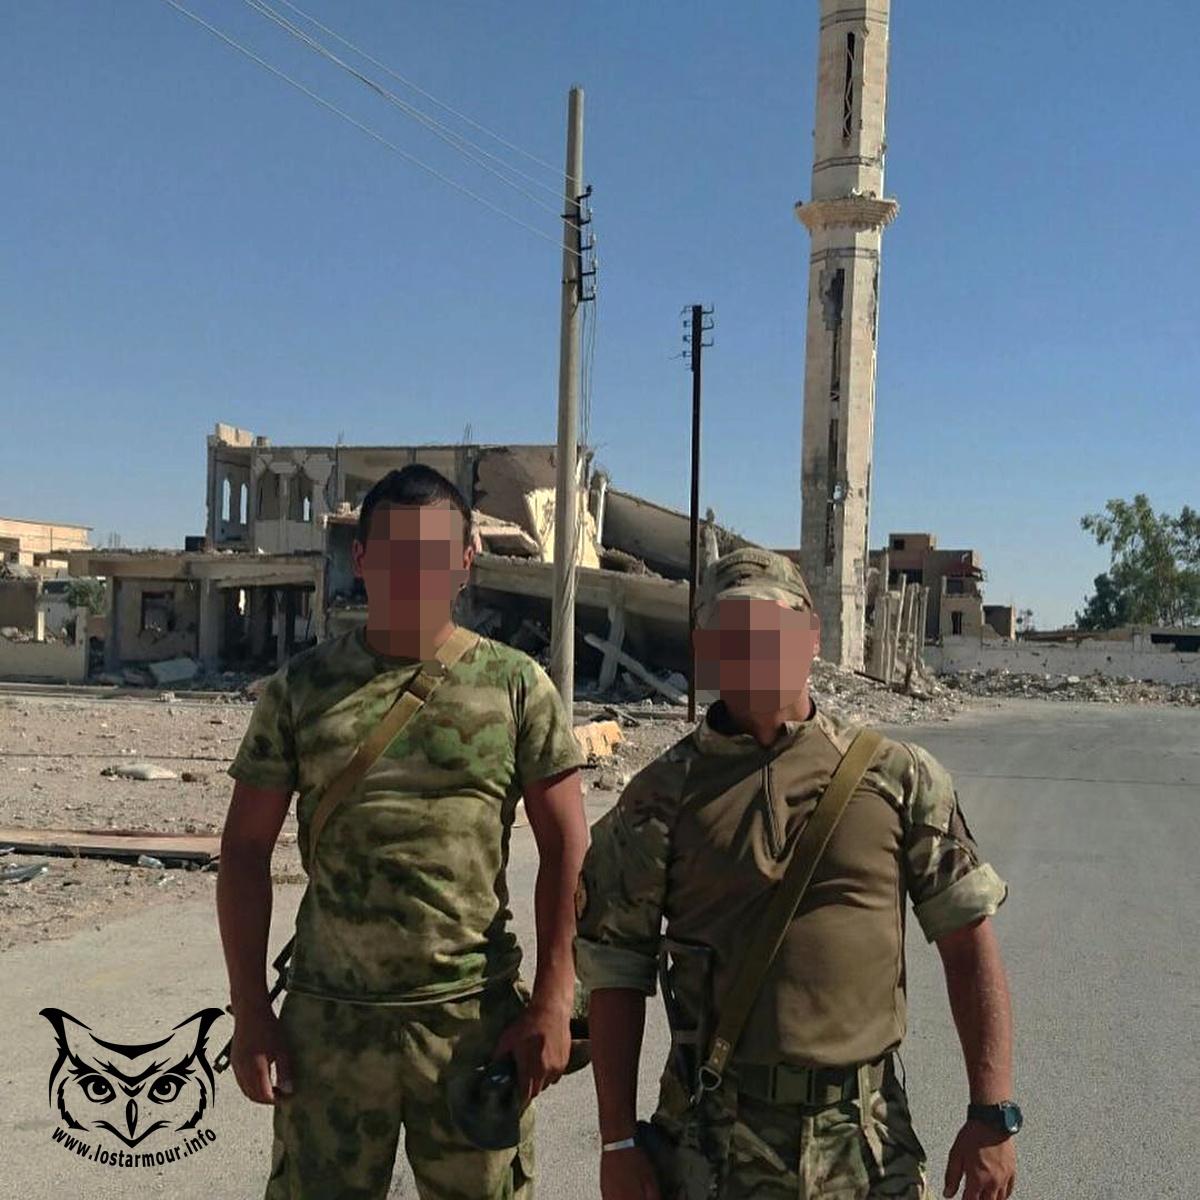 Russian MoD servicemen and spetsnaz in Syria. 16/ https://vk.com/russian_sof?z=photo-138000218_457263225%2Falbum-138000218_00%2Frev